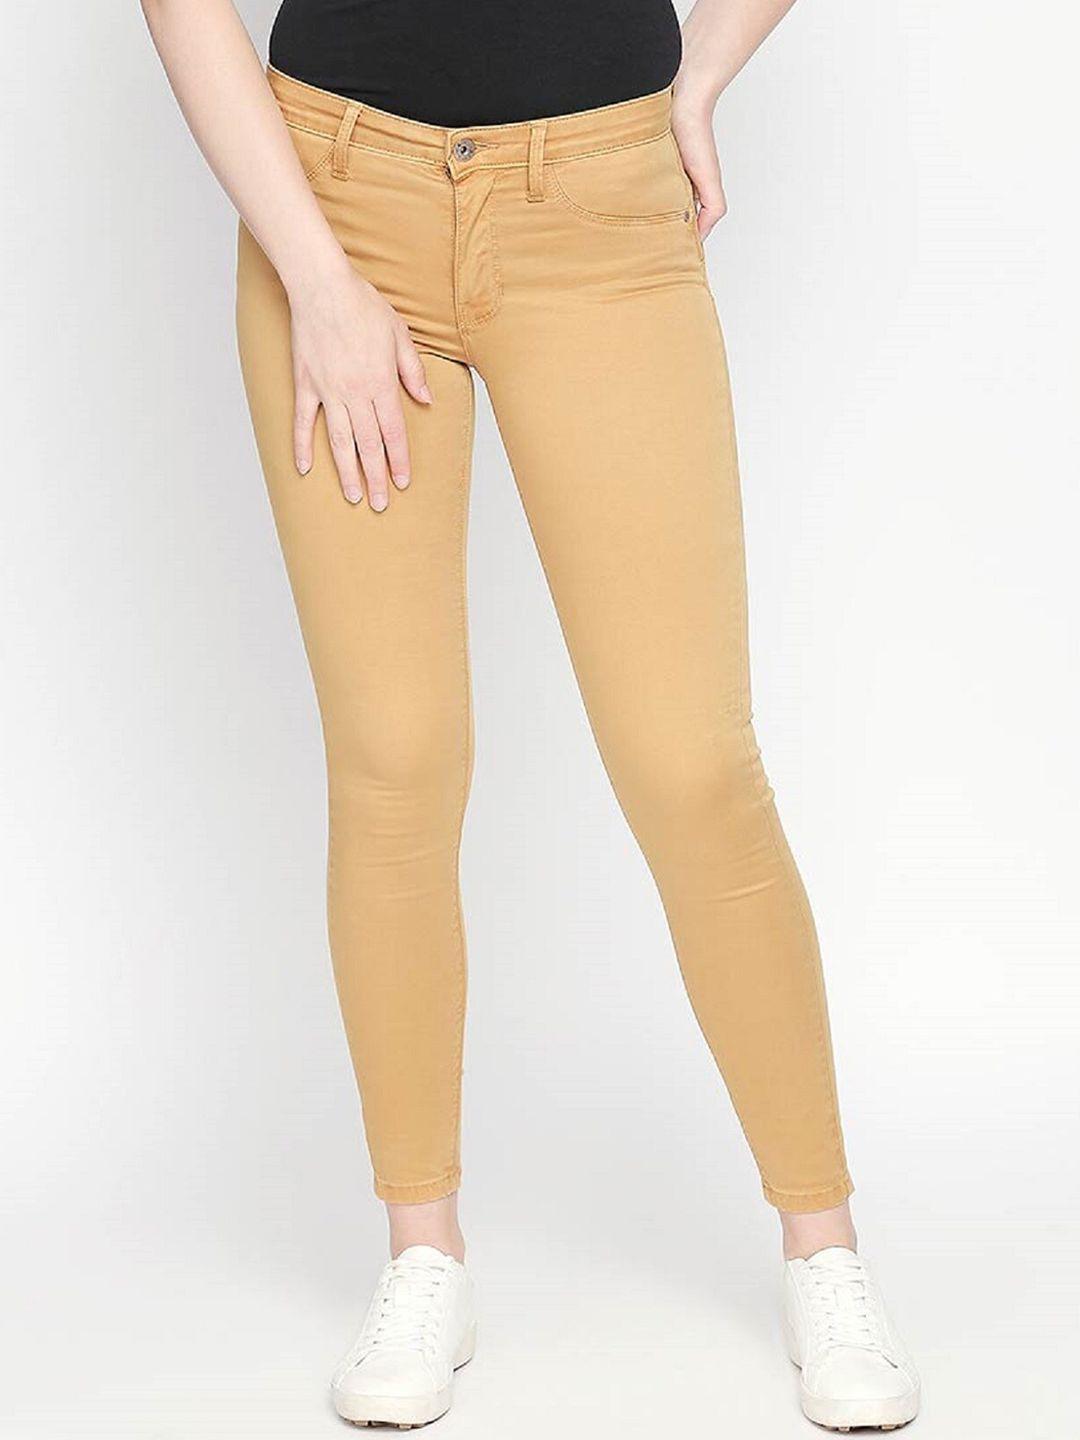 lovegen women yellow skinny fit low distress stretchable jeans